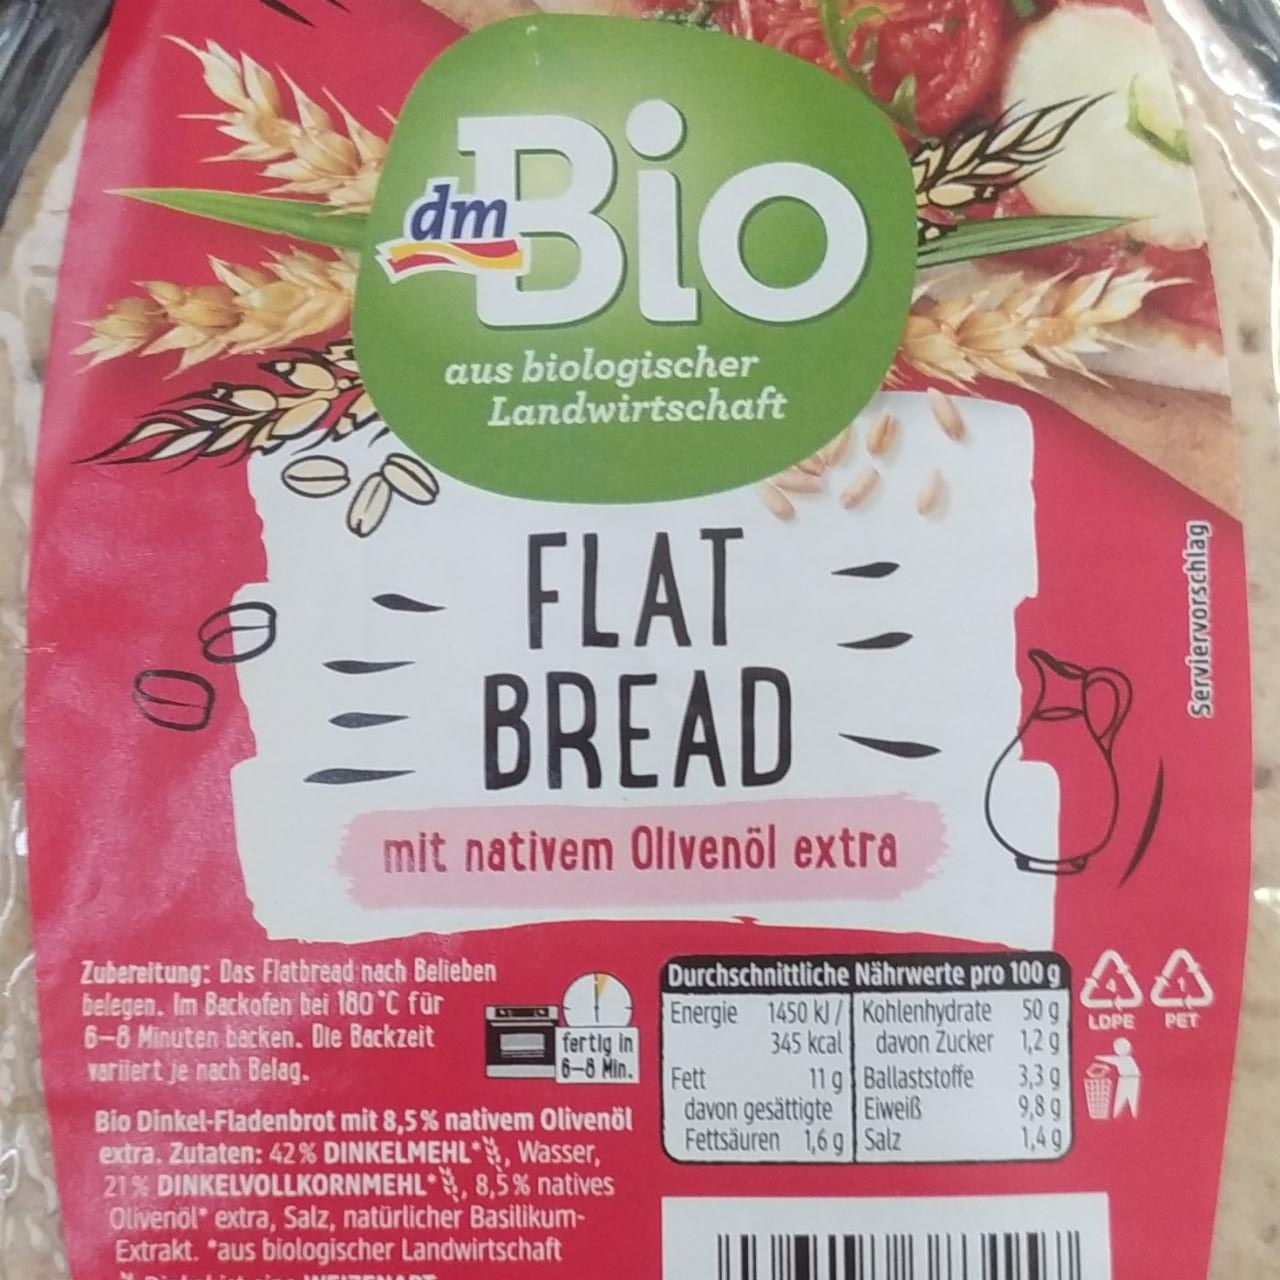 Fotografie - Flat Bread mit nativem Olivenöl extra dmBio